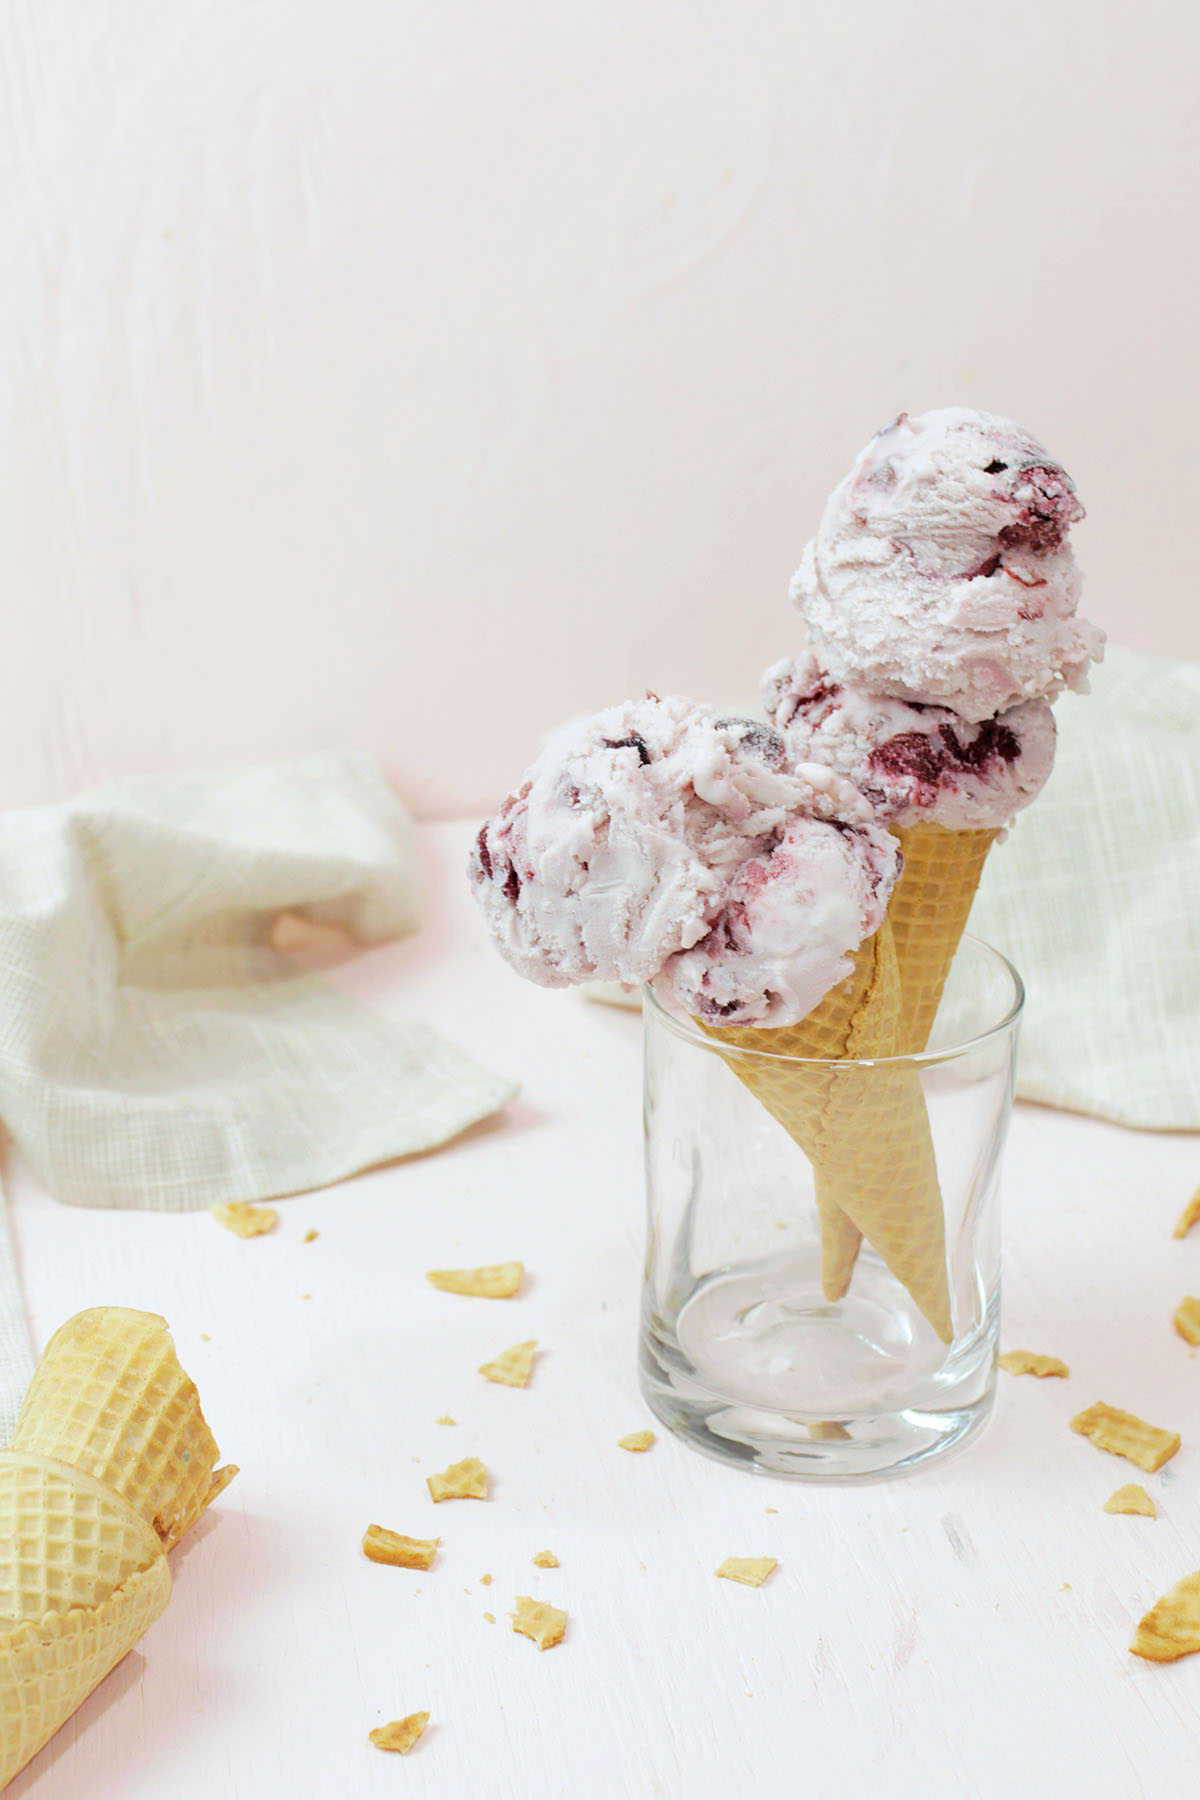 dark cherry ice cream in waffle cones.